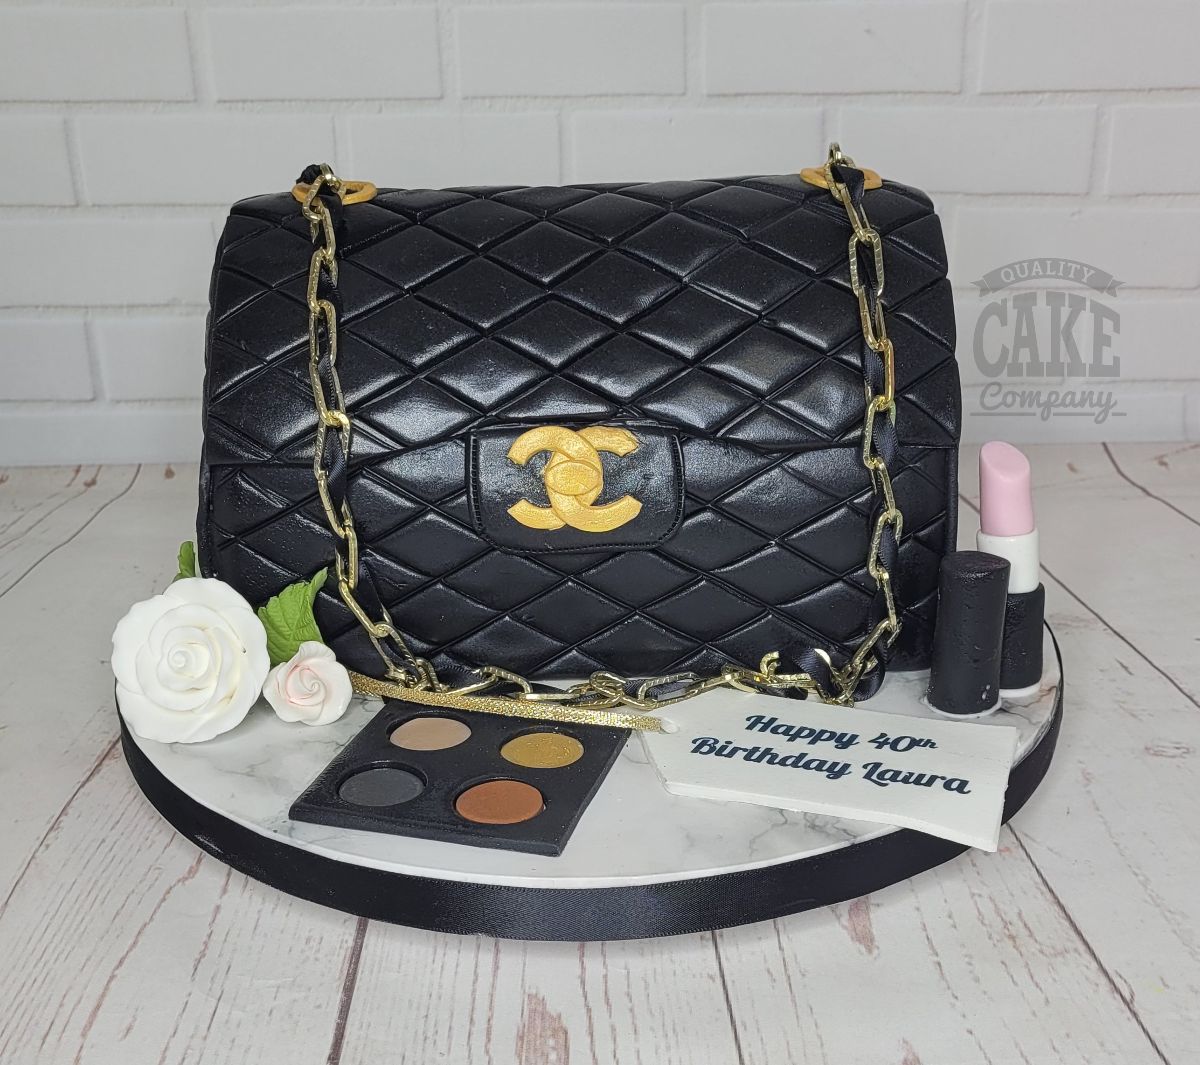 Michael Kors Bag Cake - CS0044 – Circo's Pastry Shop